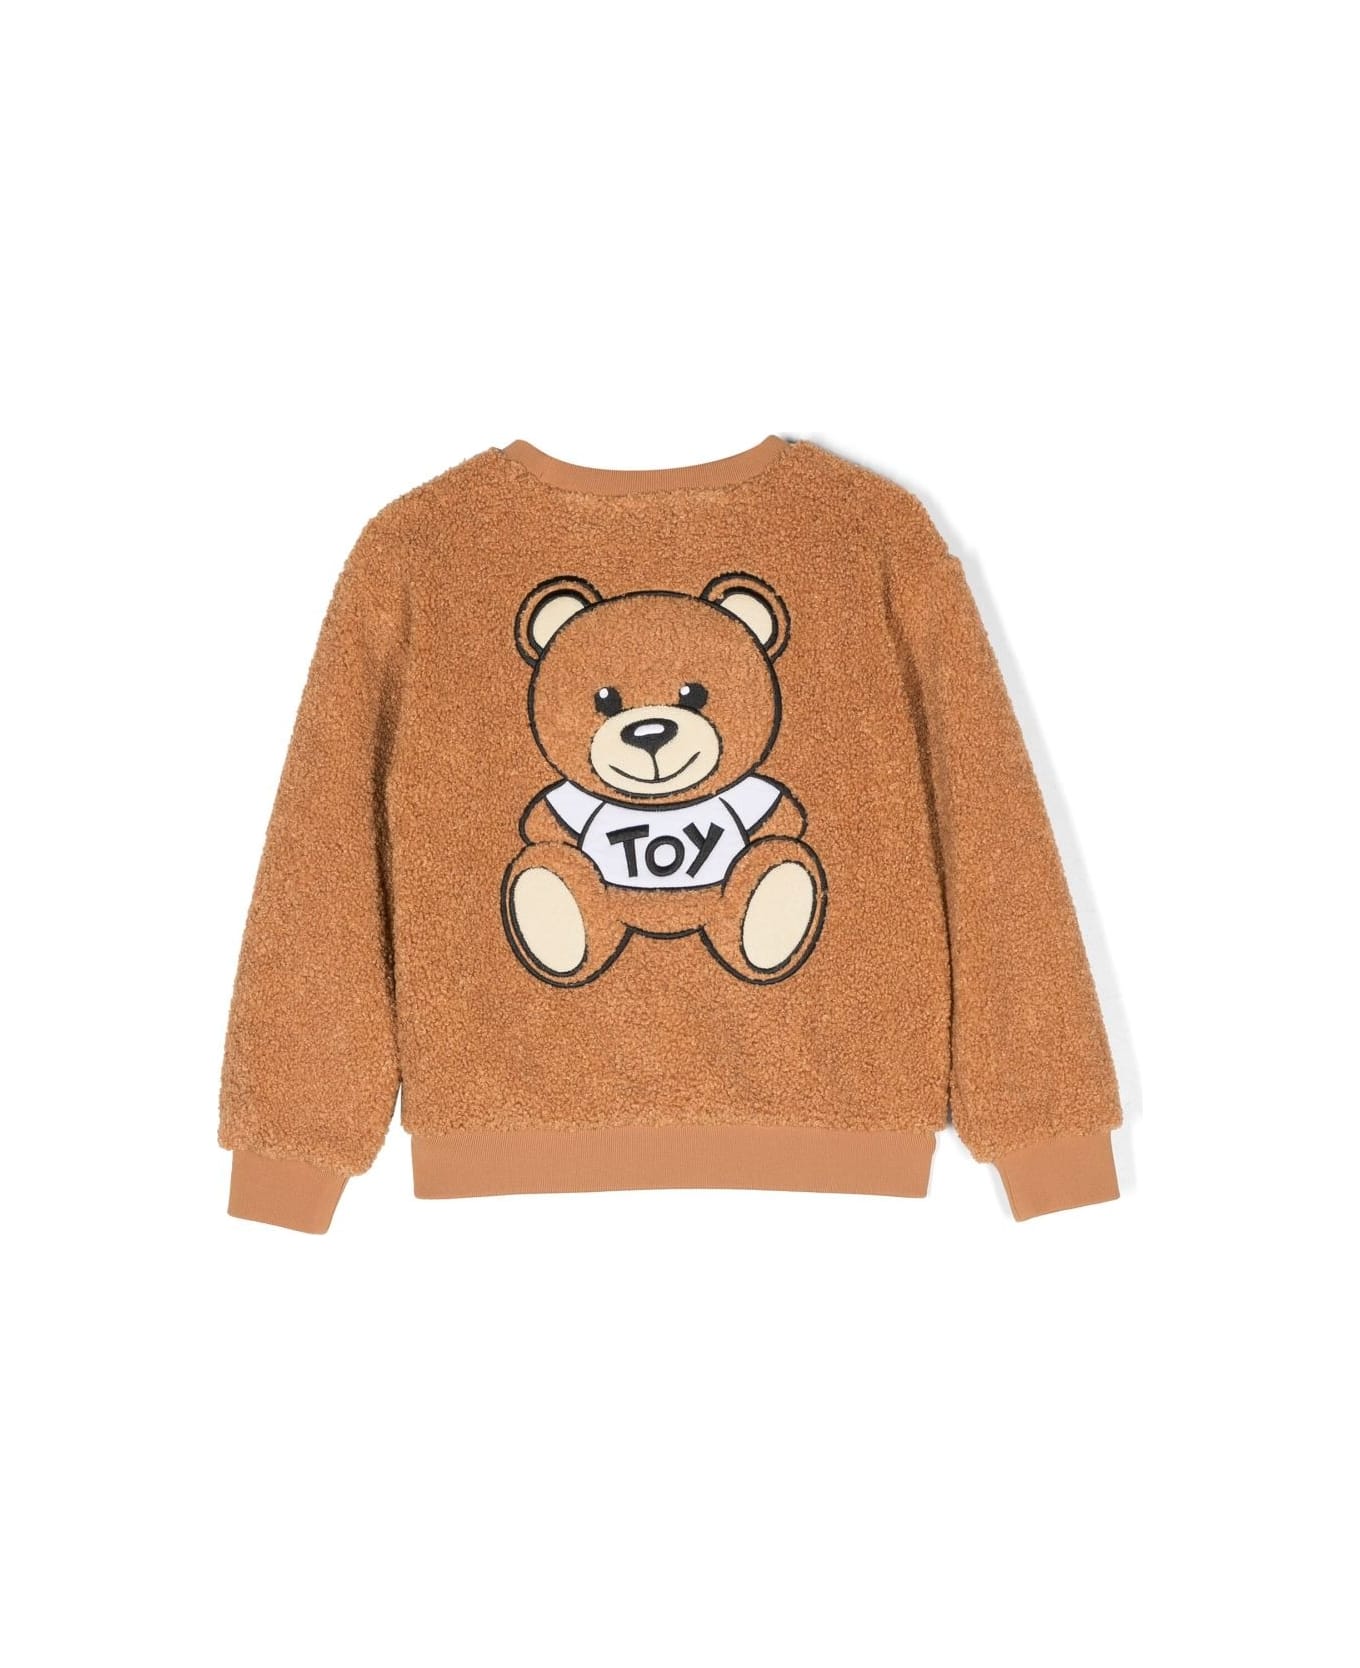 Moschino Teddy Bear Sweatshirt In Caramel Colour - BROWN